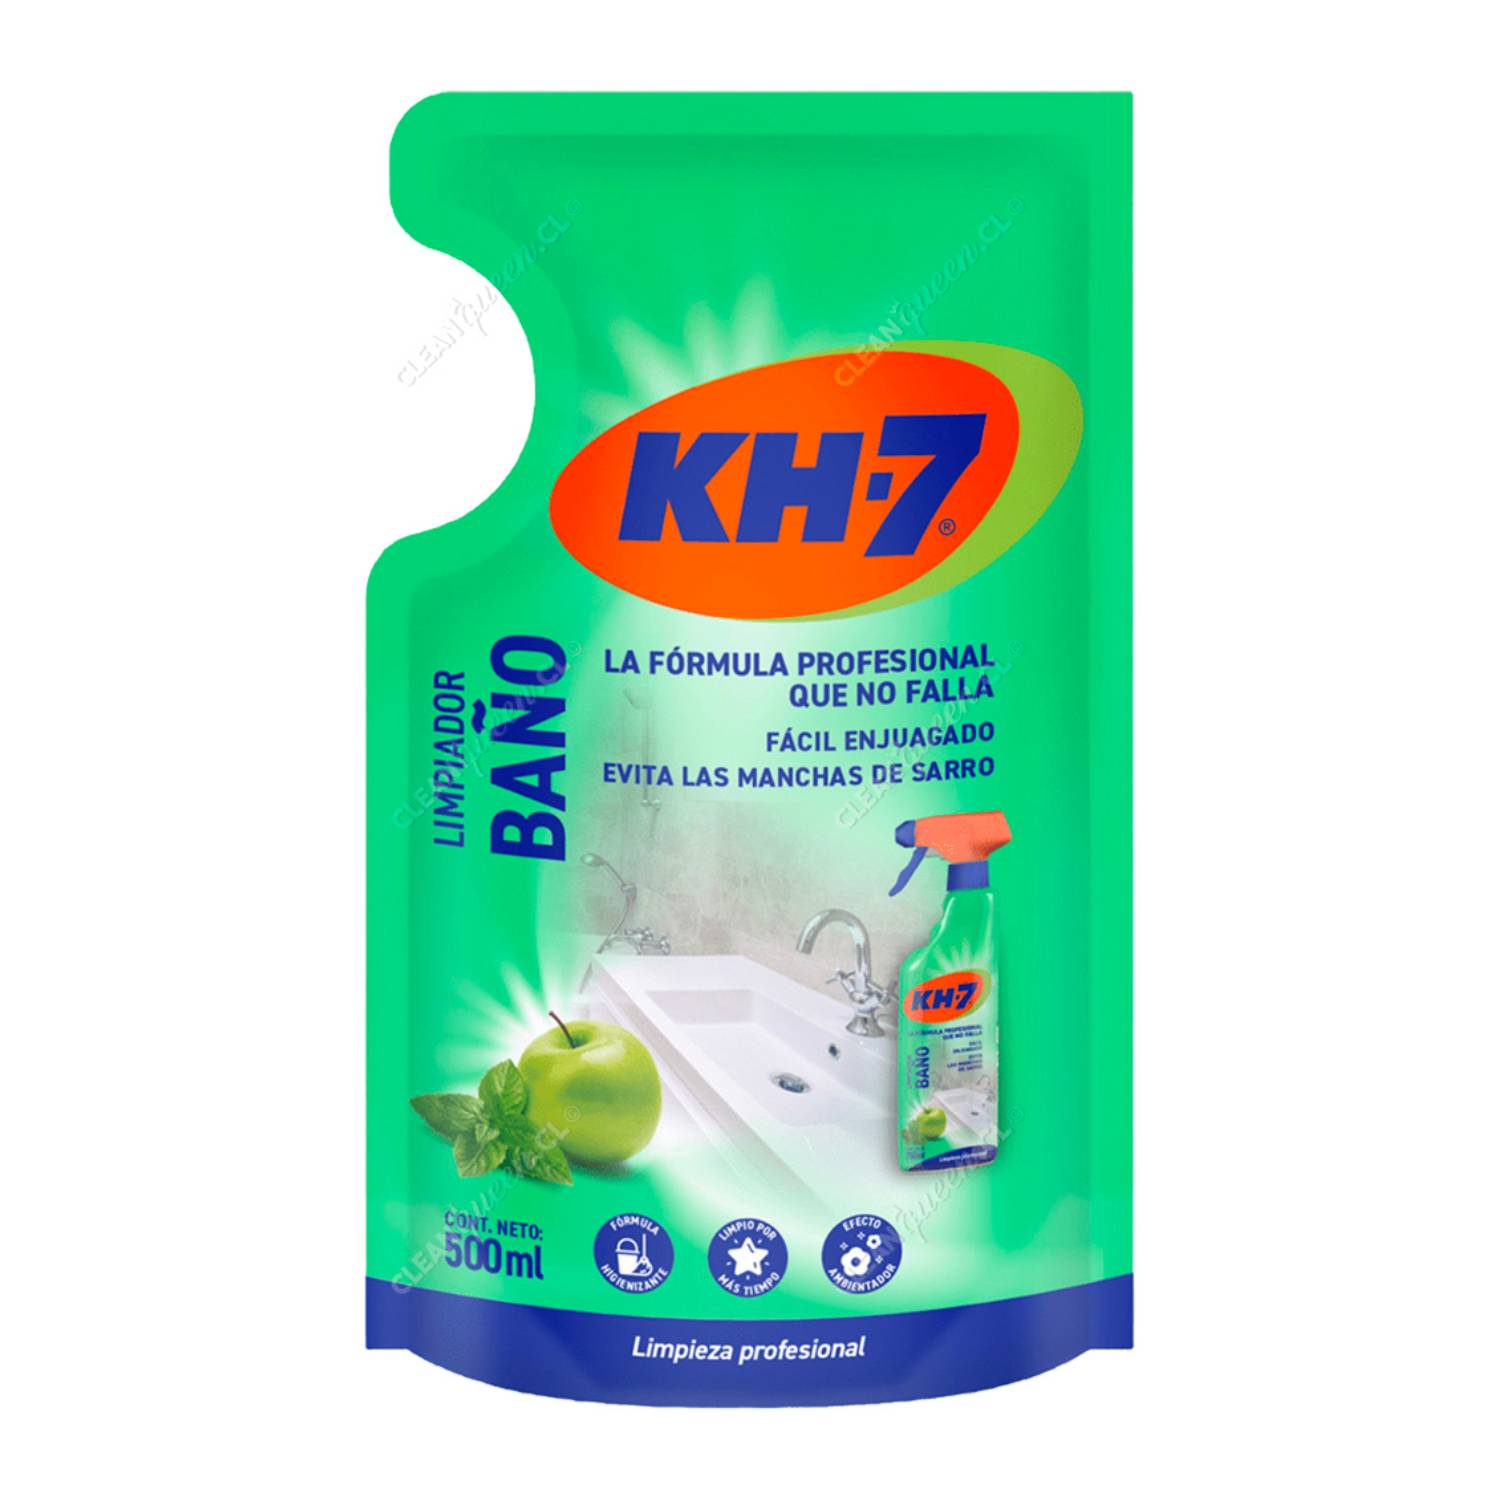 Duplo KH7 súper limpiador + KH7 baños, Brico Depôt